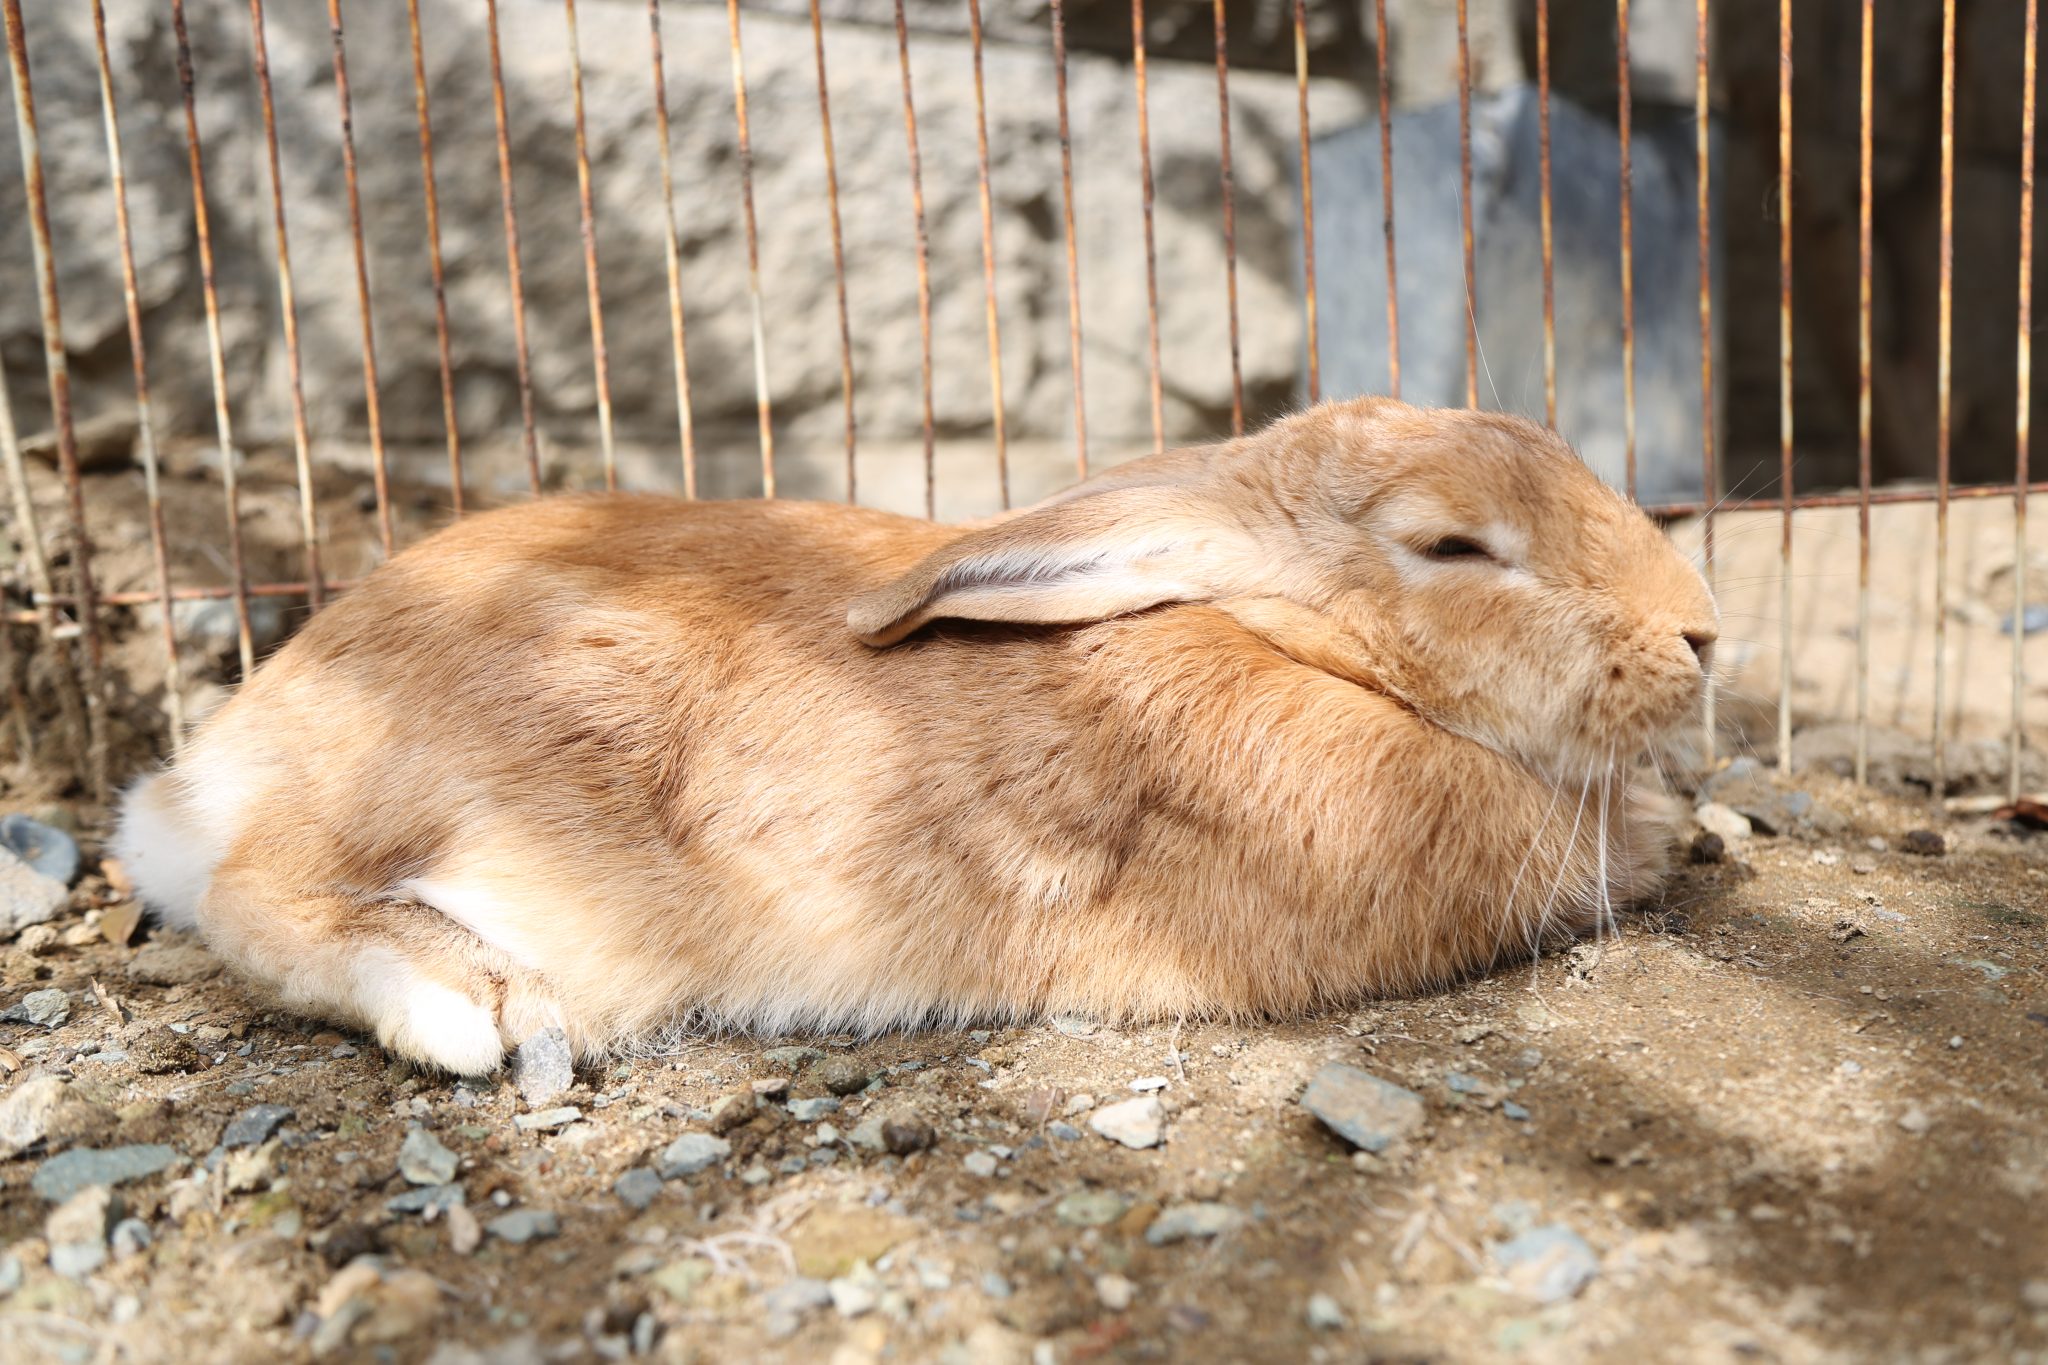 Rabbit taking a nap